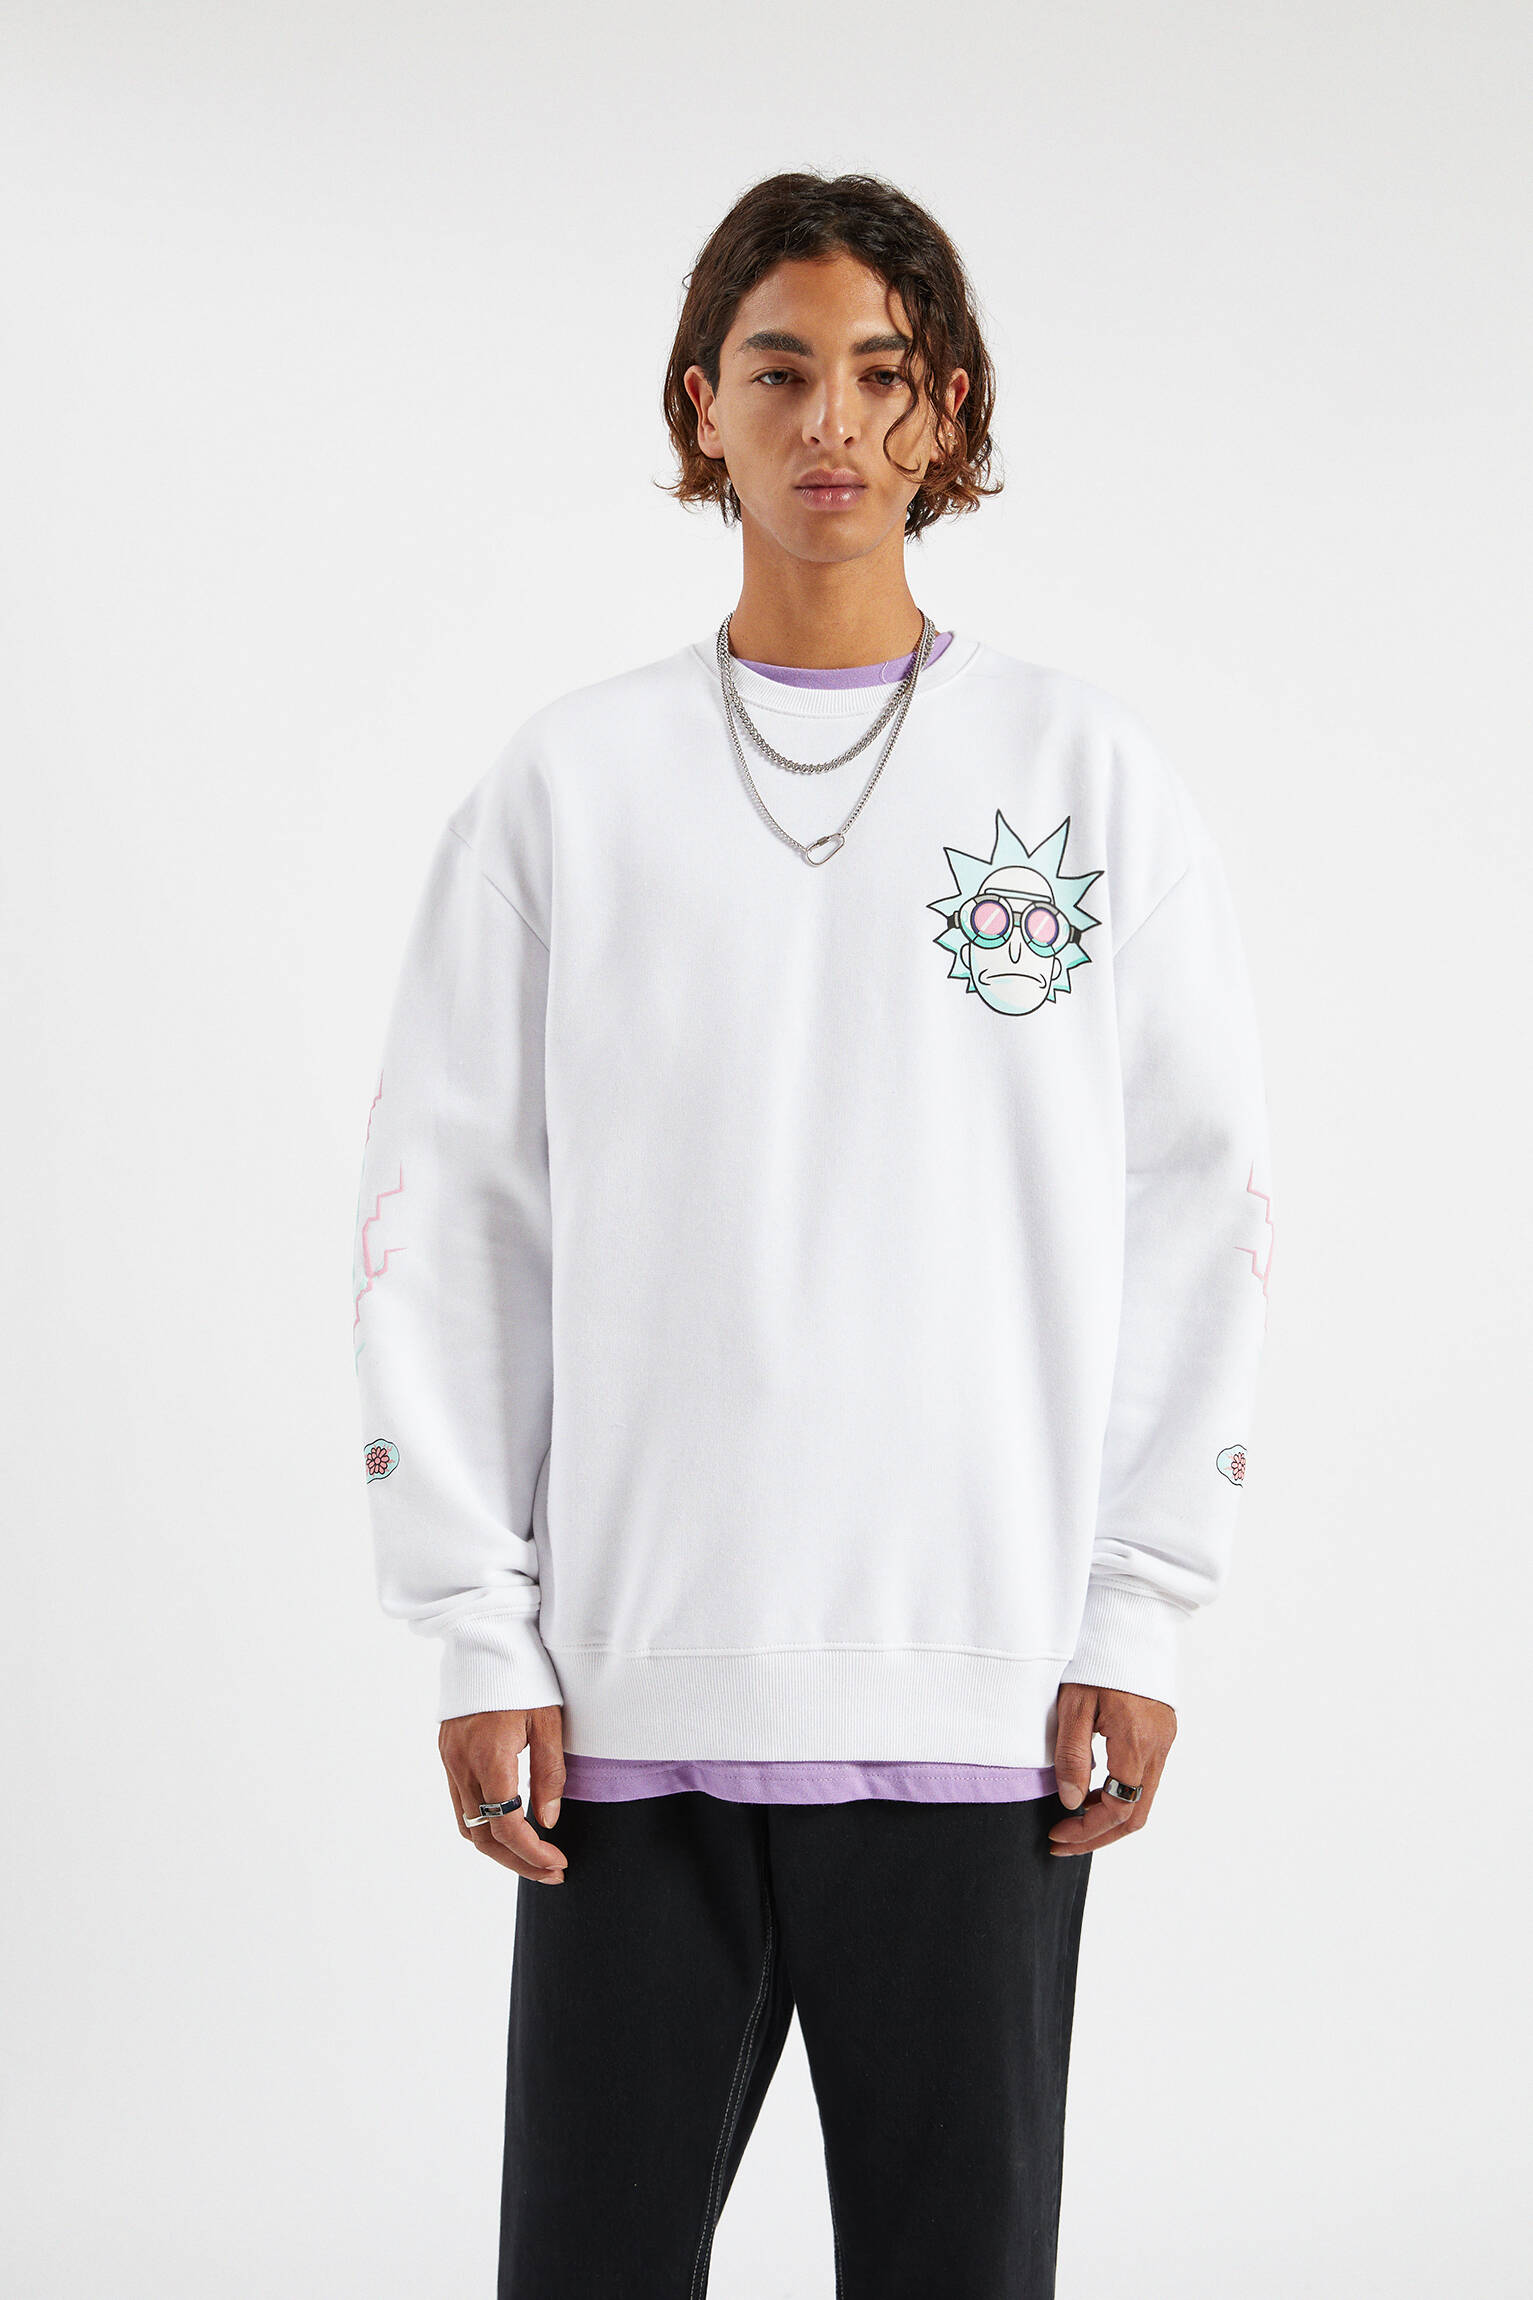 Modalite.net - Pull & Bear - White Rick & Morty sweatshirt